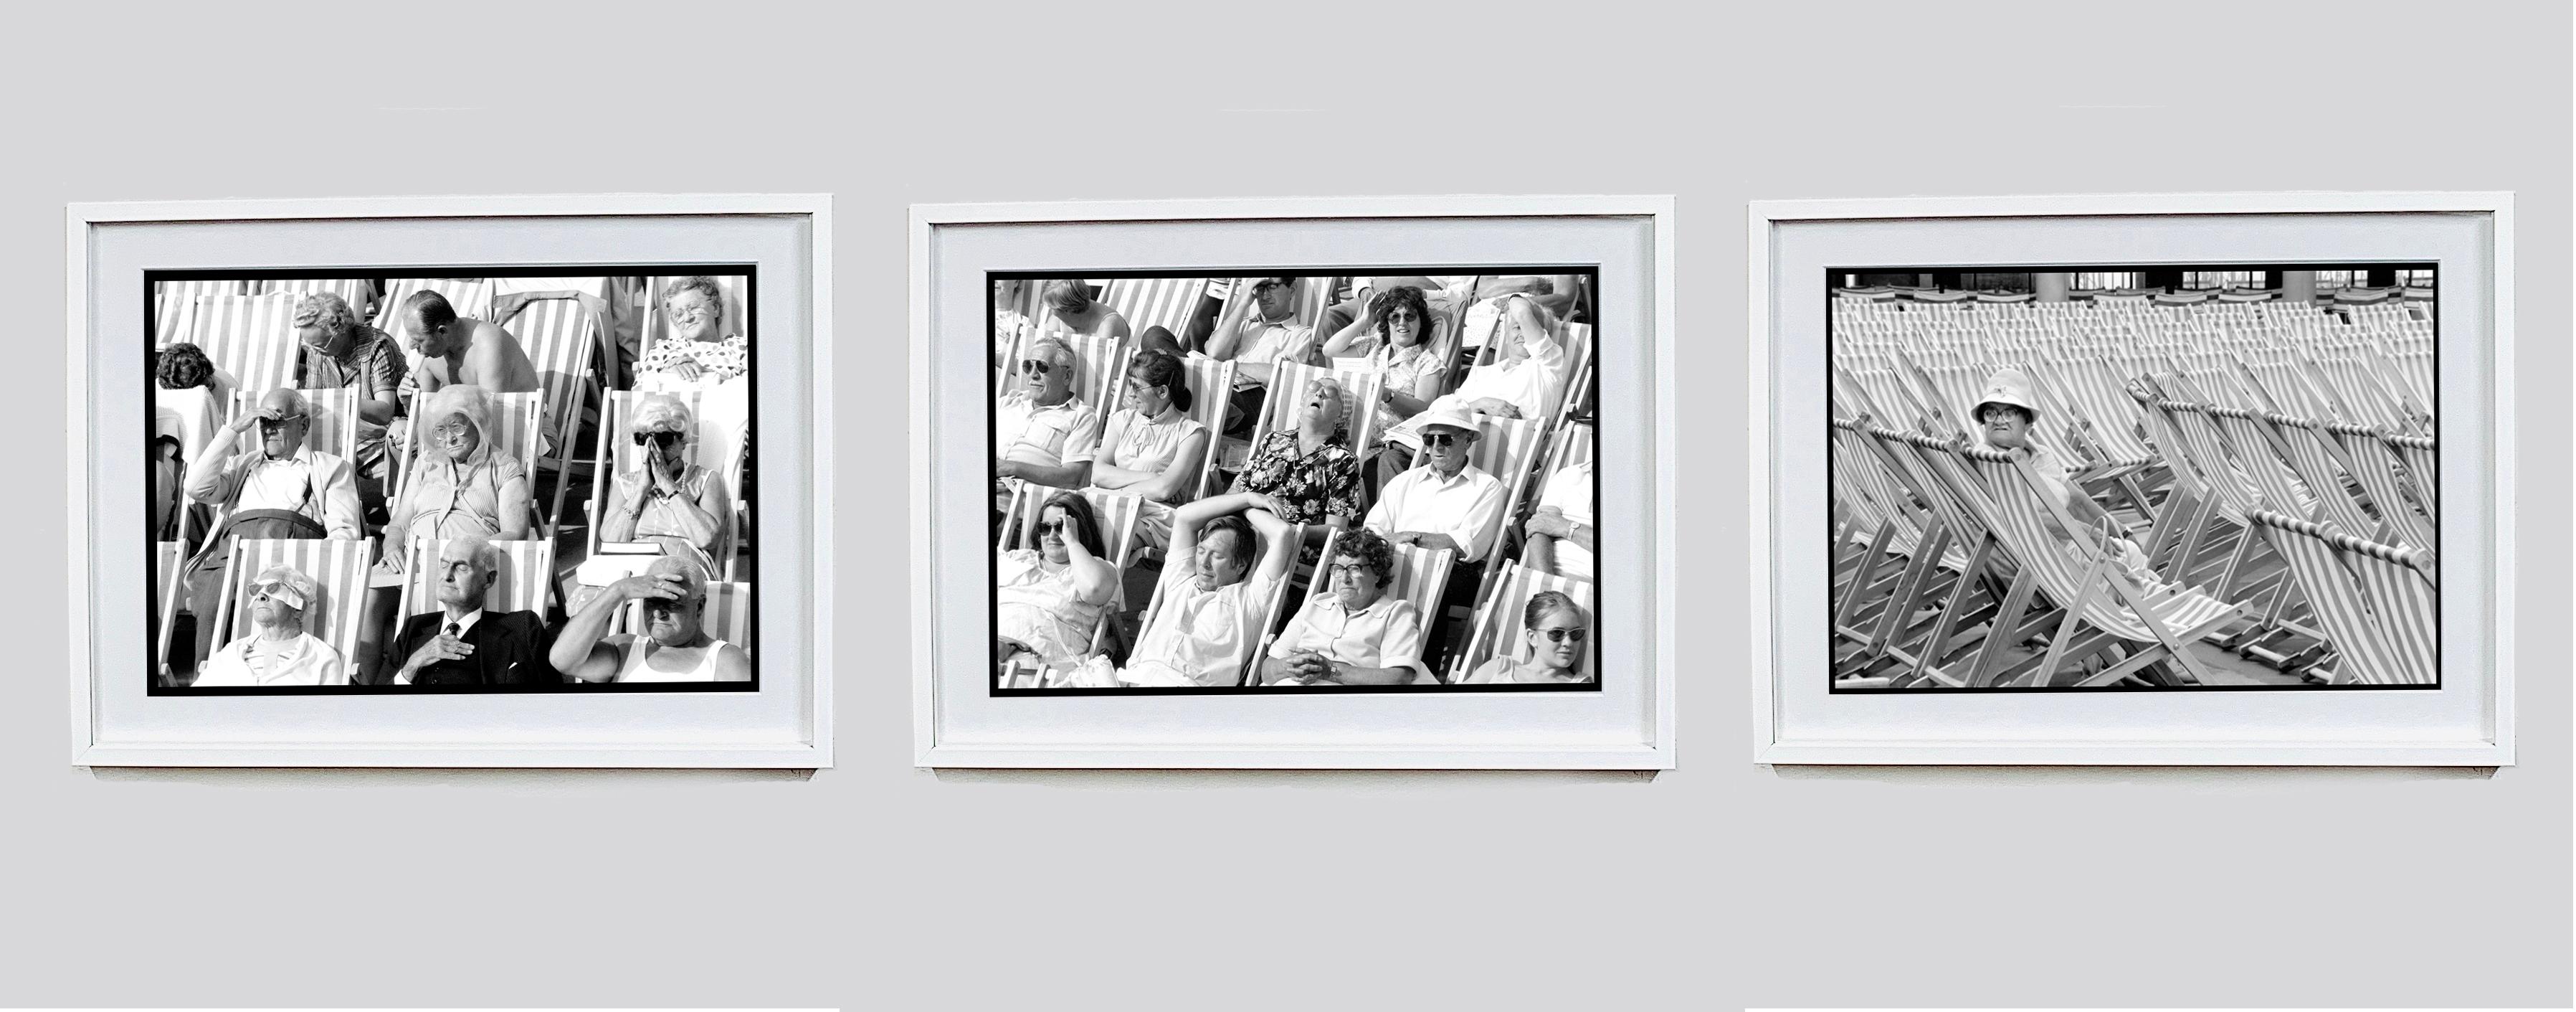 Bandstand I, Eastbourne, UK - Black and White Vintage Photography For Sale 6